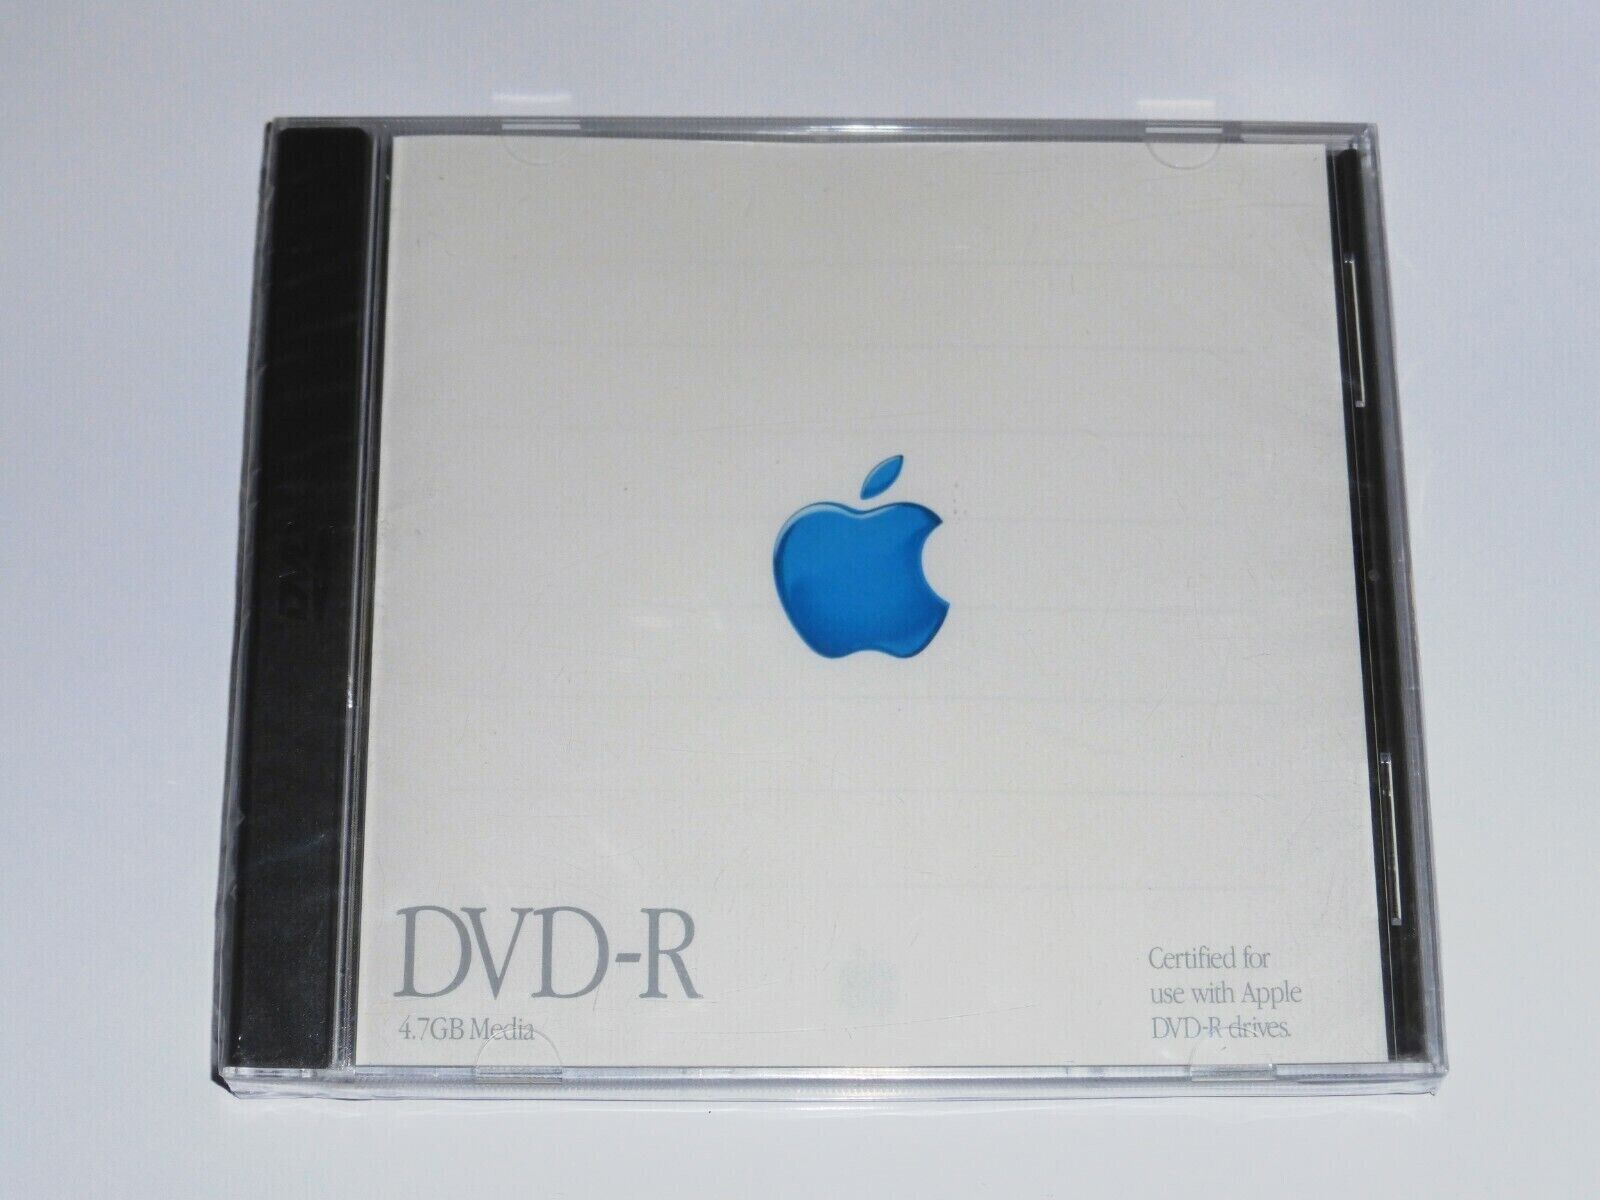 Apple DVD-R 4.7GB Blank Disc Media Certified for Apple DVD-R drives